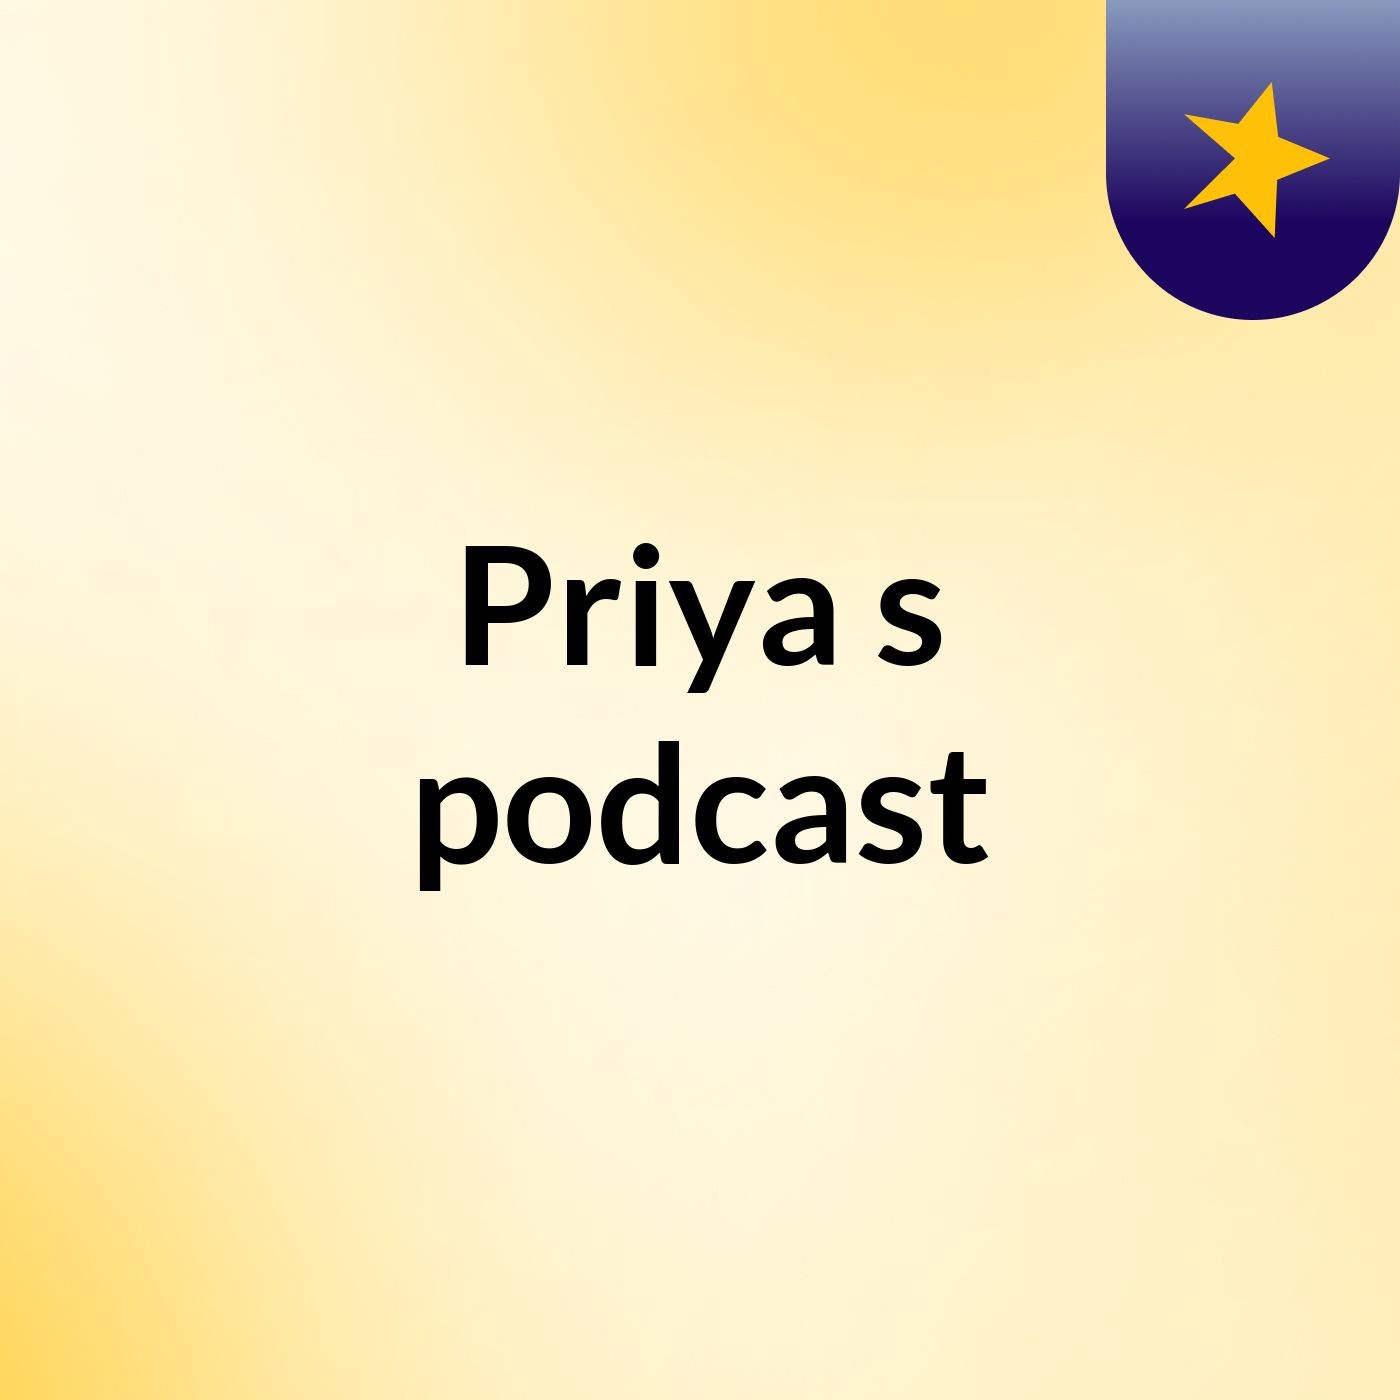 Priya's podcast